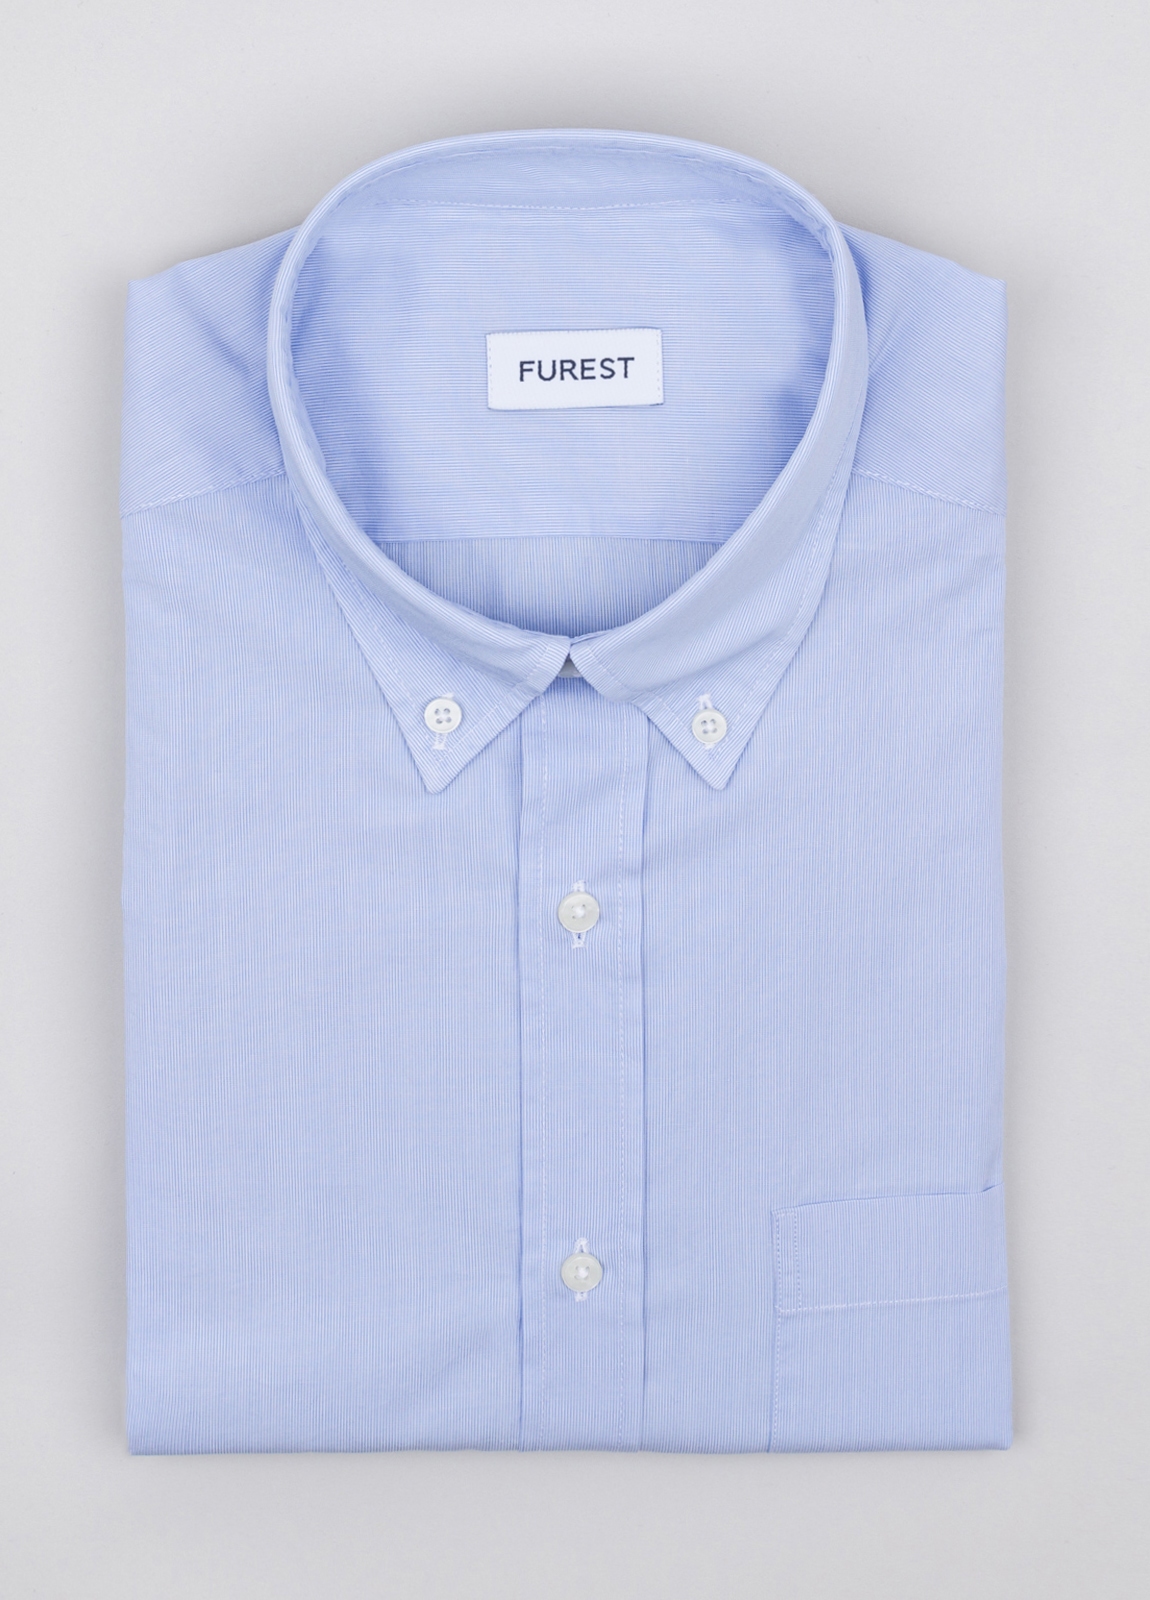 Camisa sport FUREST COLECCION micro rayas azul - Ítem1